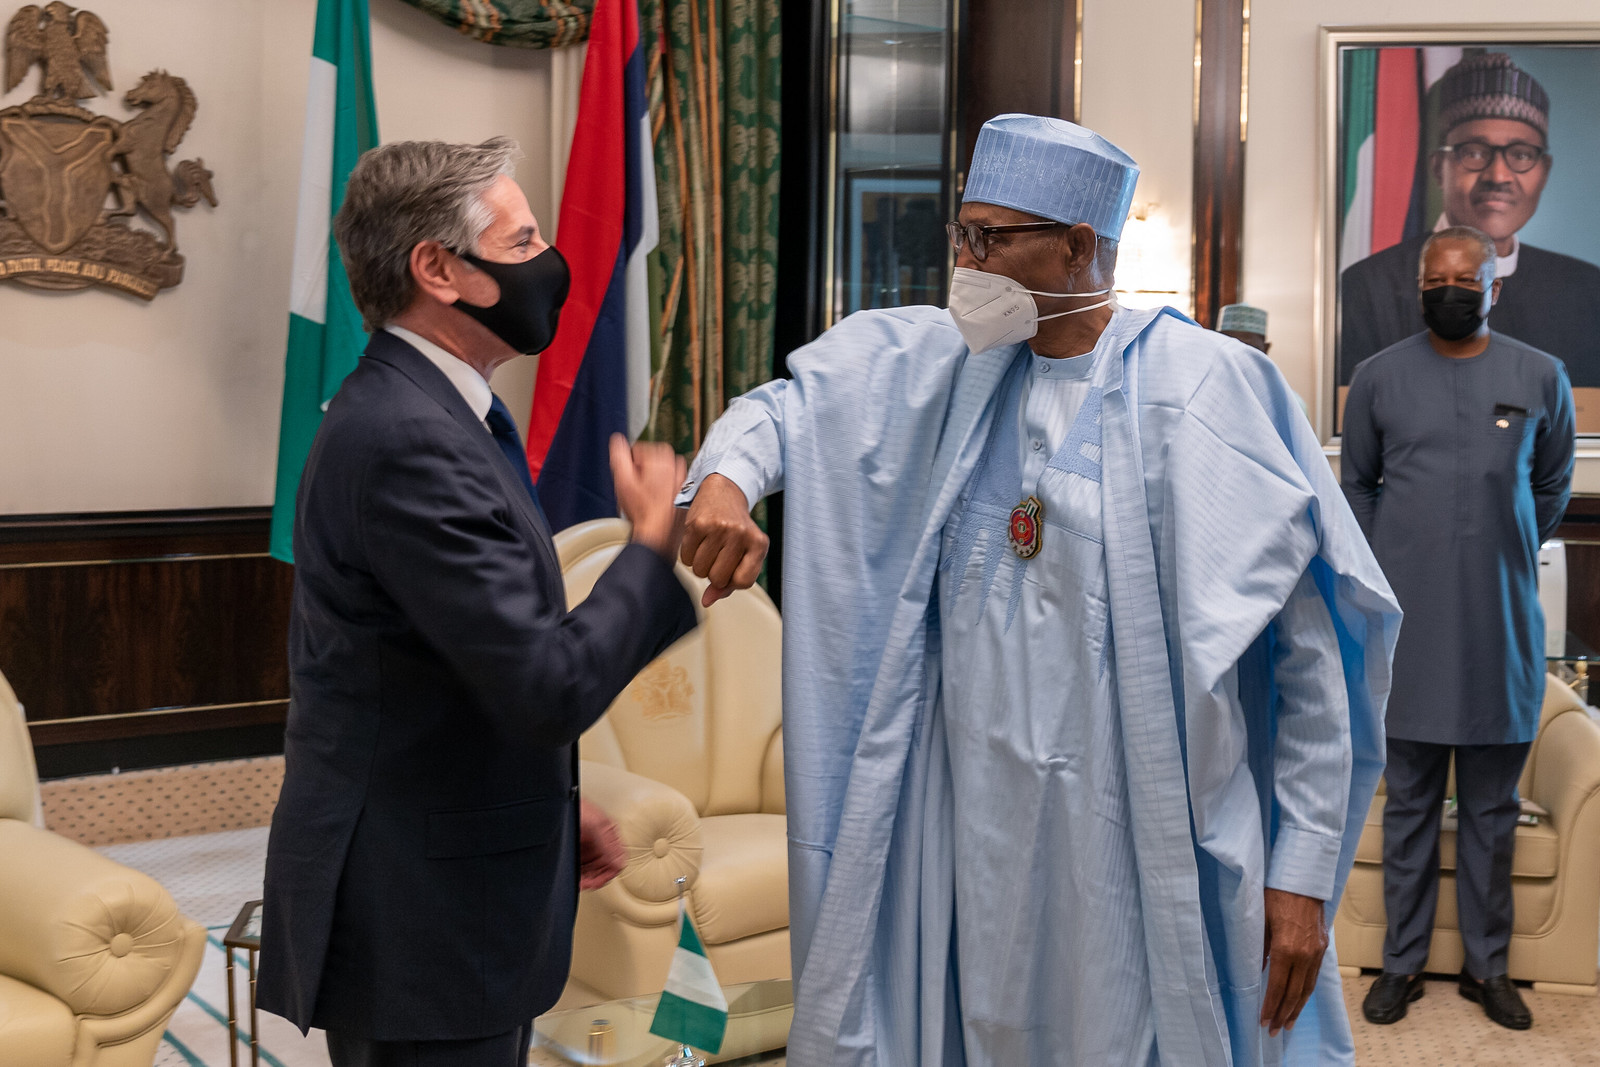 Secretary Blinken and Nigerian president Buhari